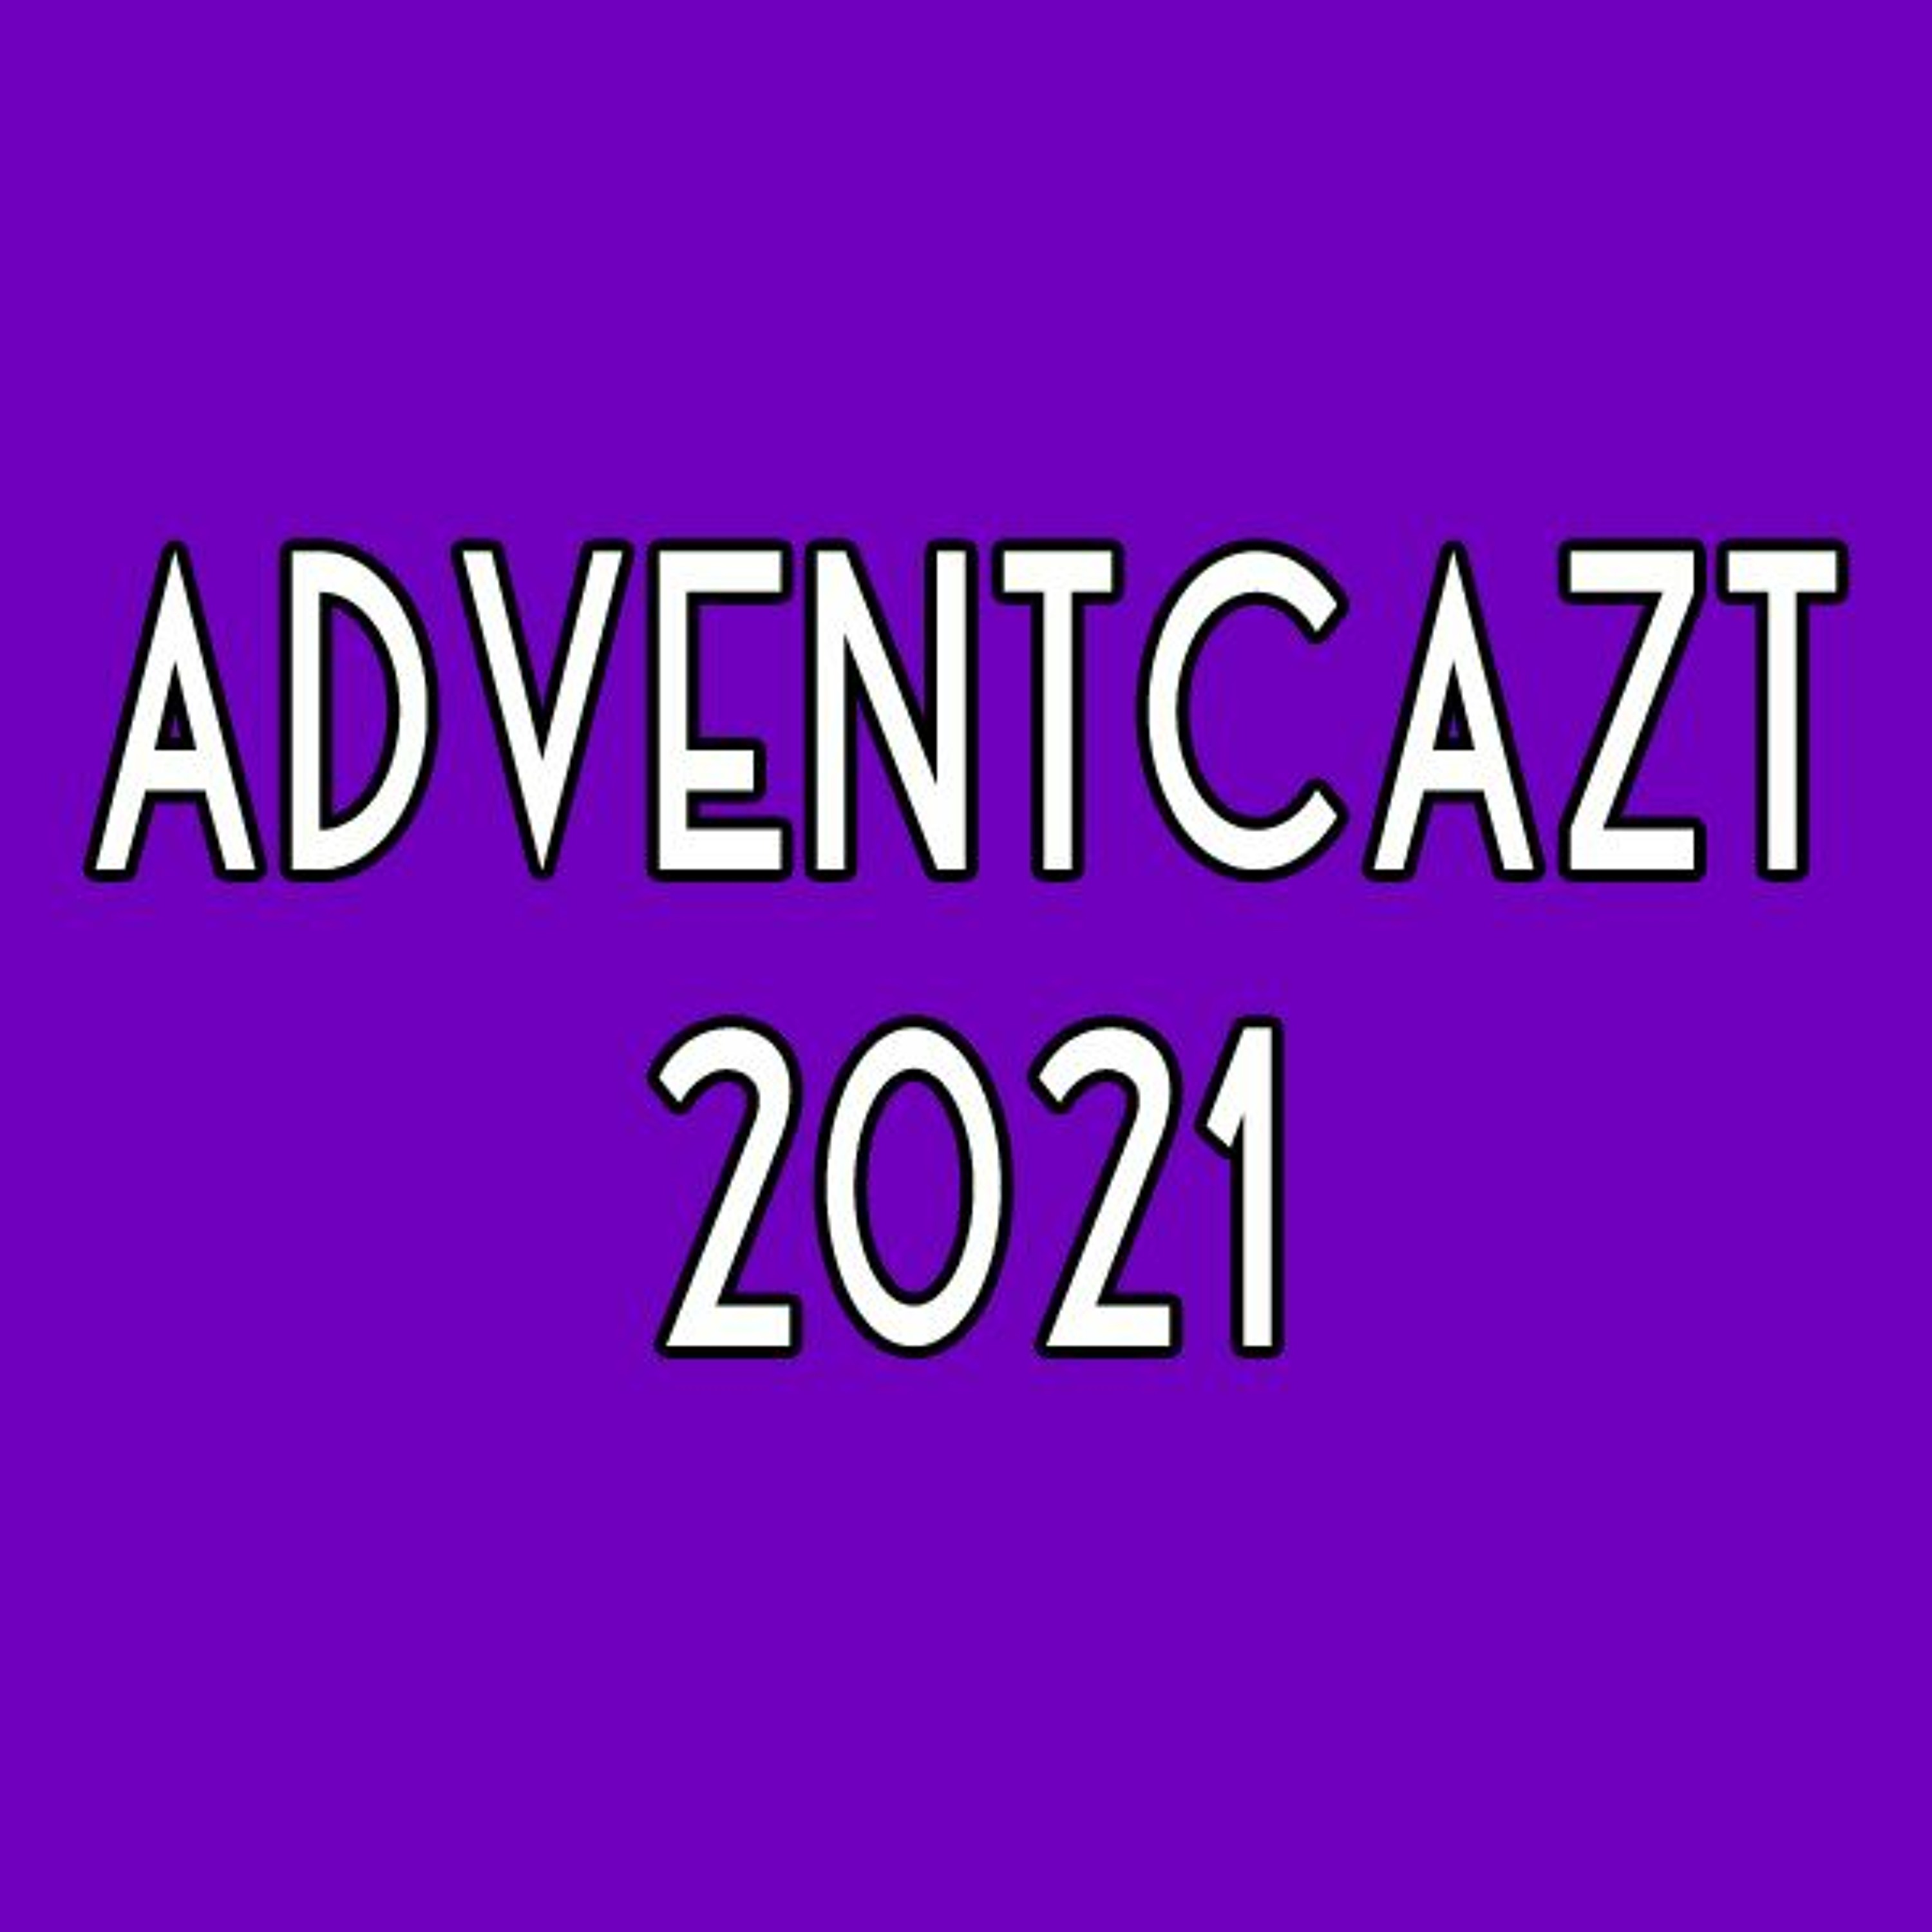 ADVENTCAzT 2021: 21 - 4th Sunday of Advent